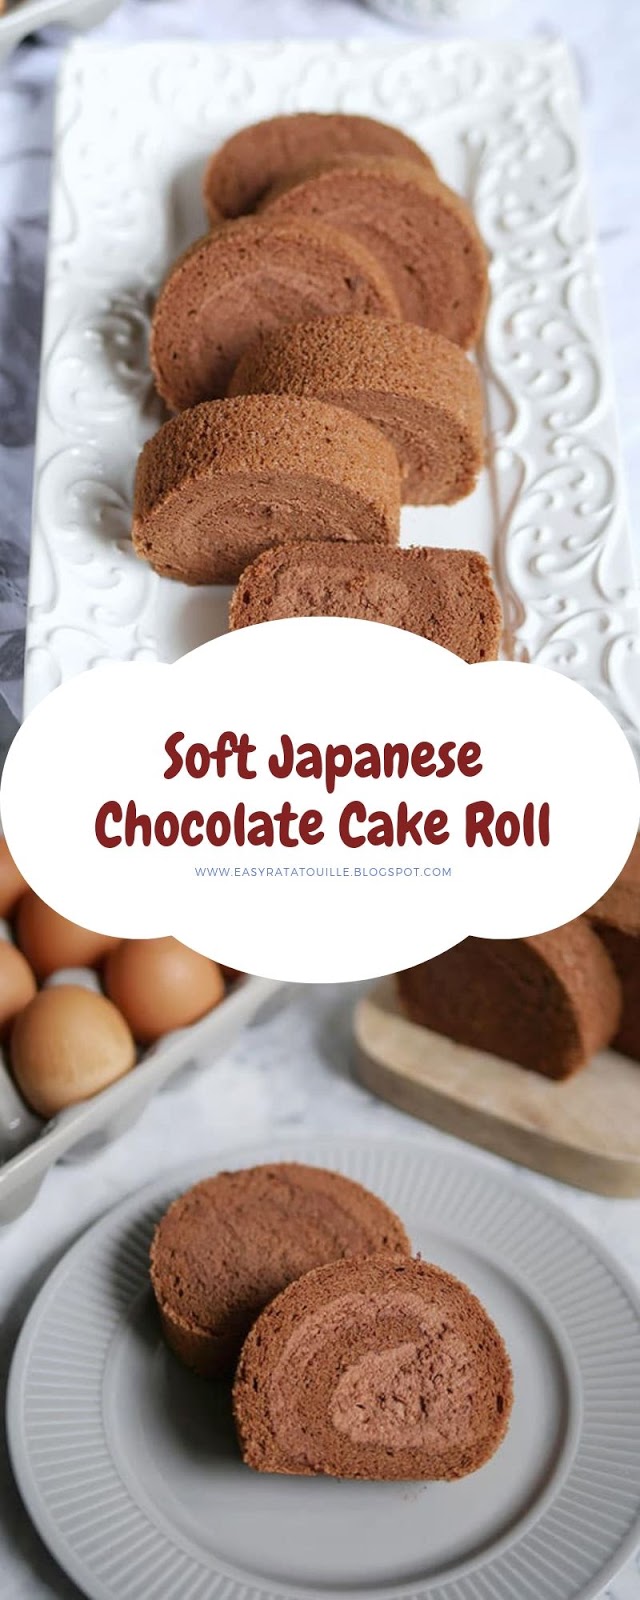 Soft Japanese Chocolate Cake Roll